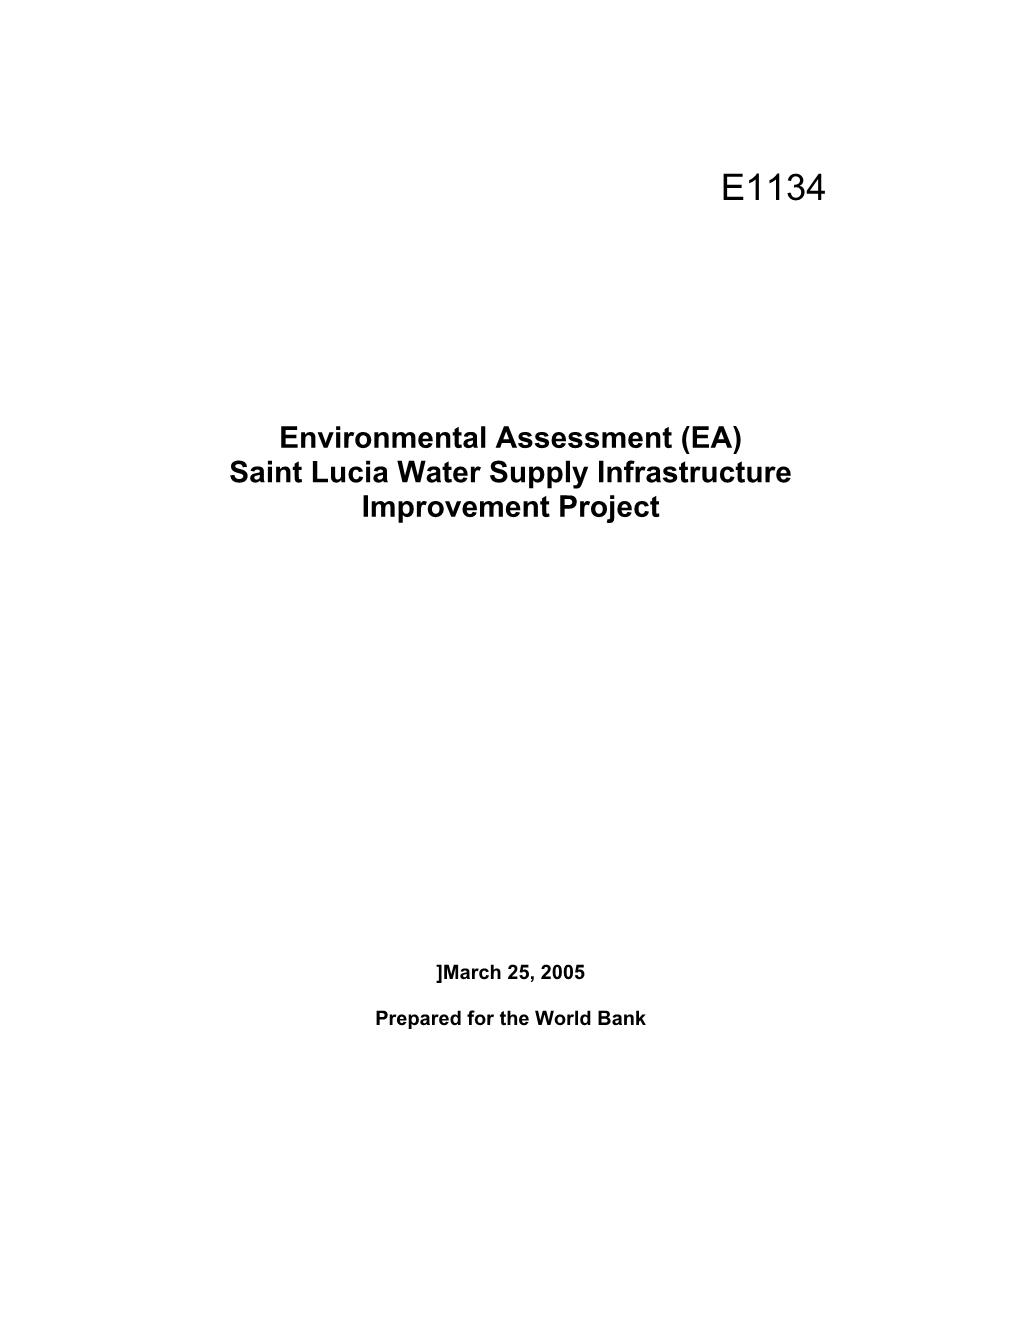 Environmental Assessment (EA)